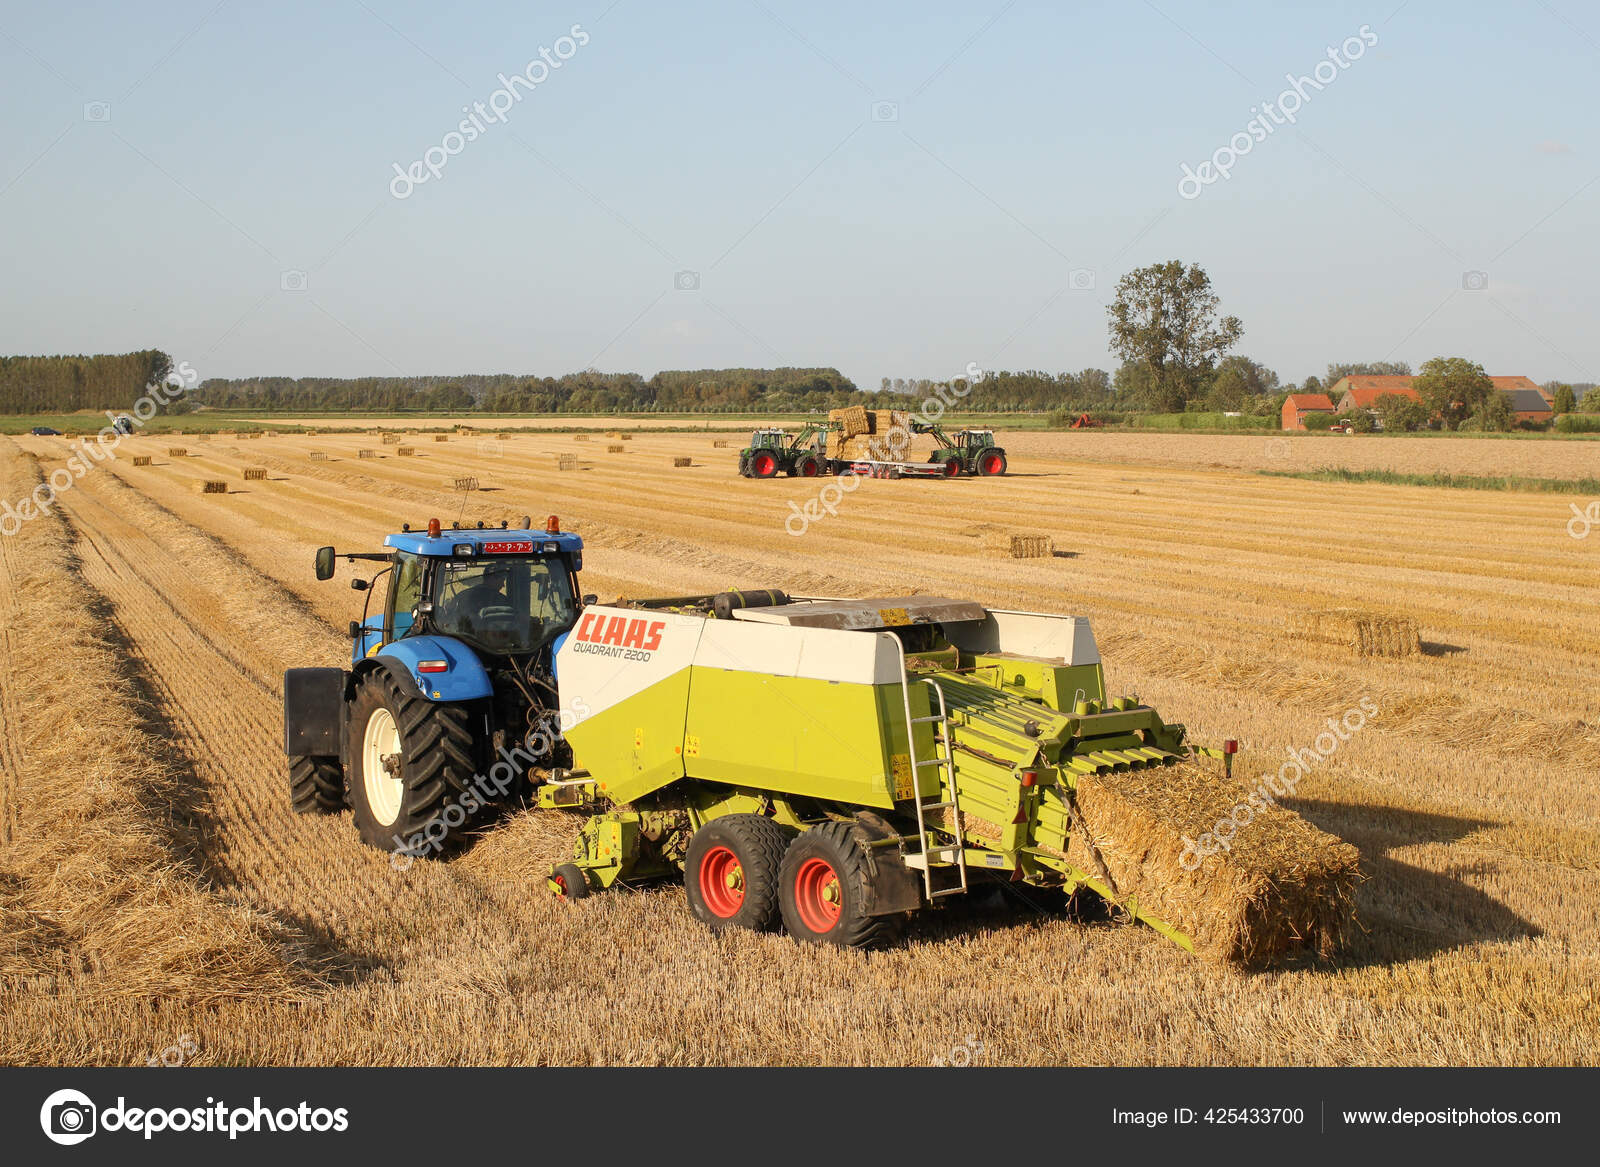 depositphotos_425433700-stock-photo-tractor-big-baler-making-straw.jpg